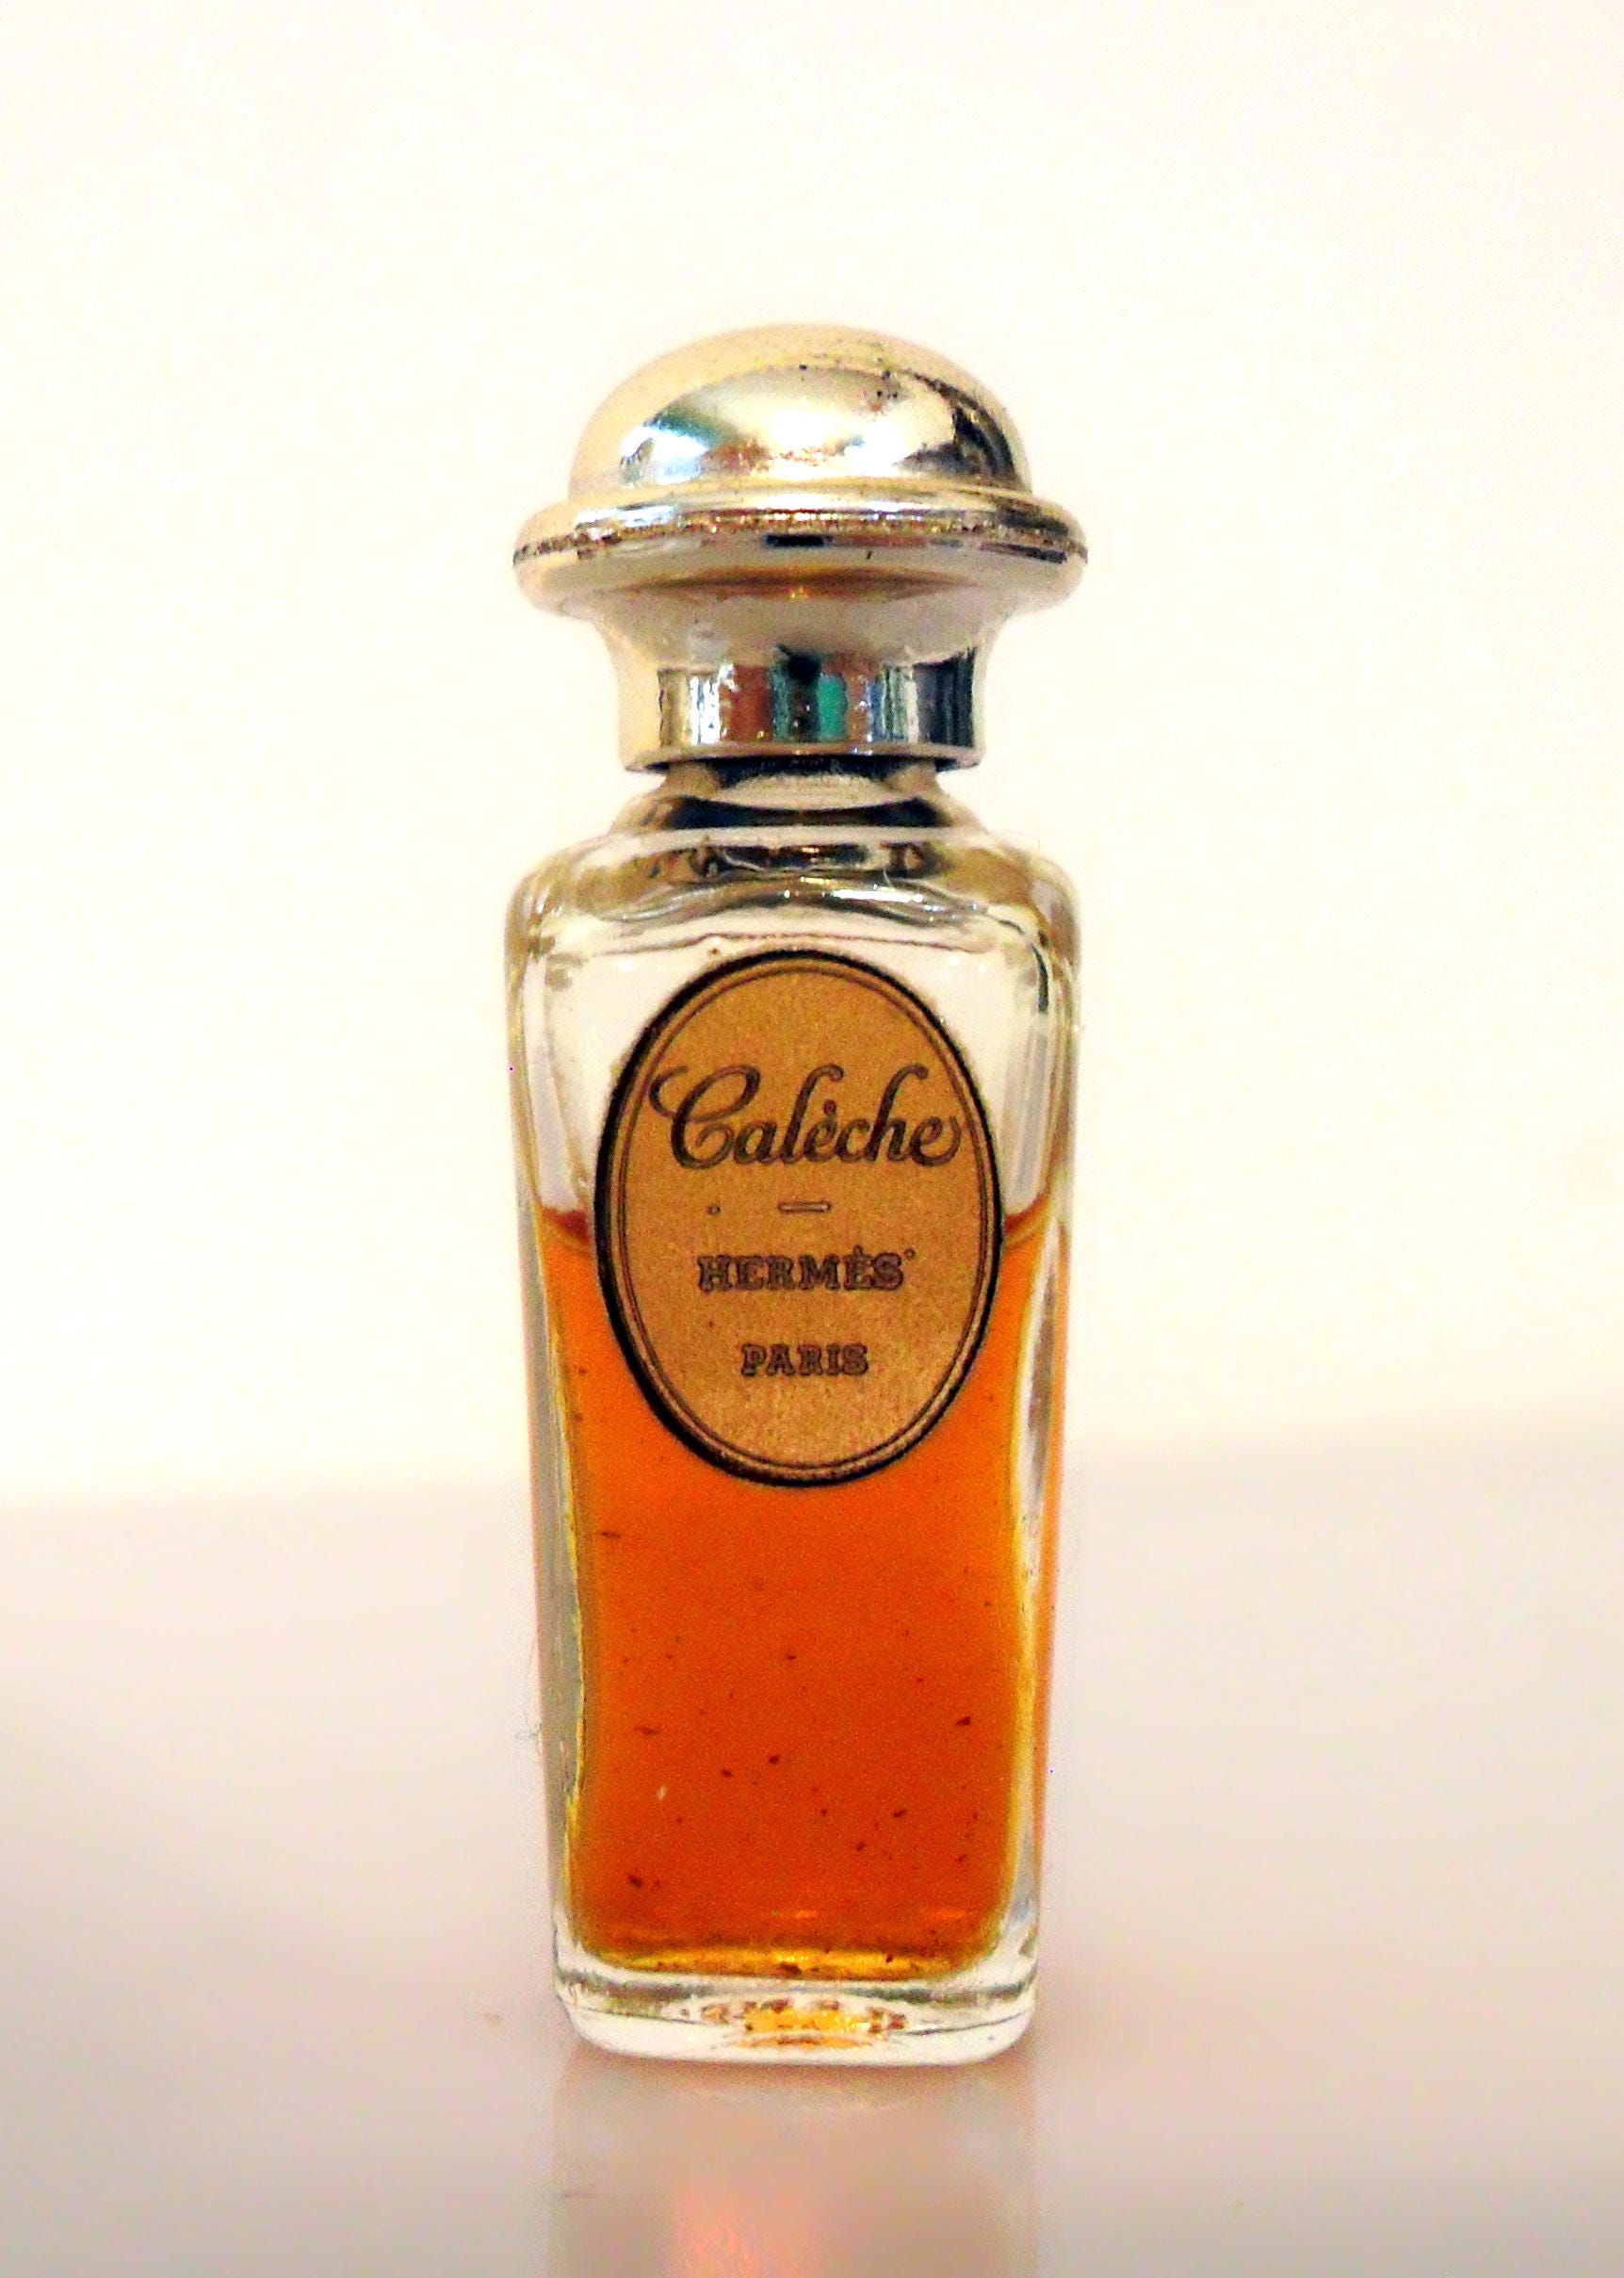 vintage hermes perfume